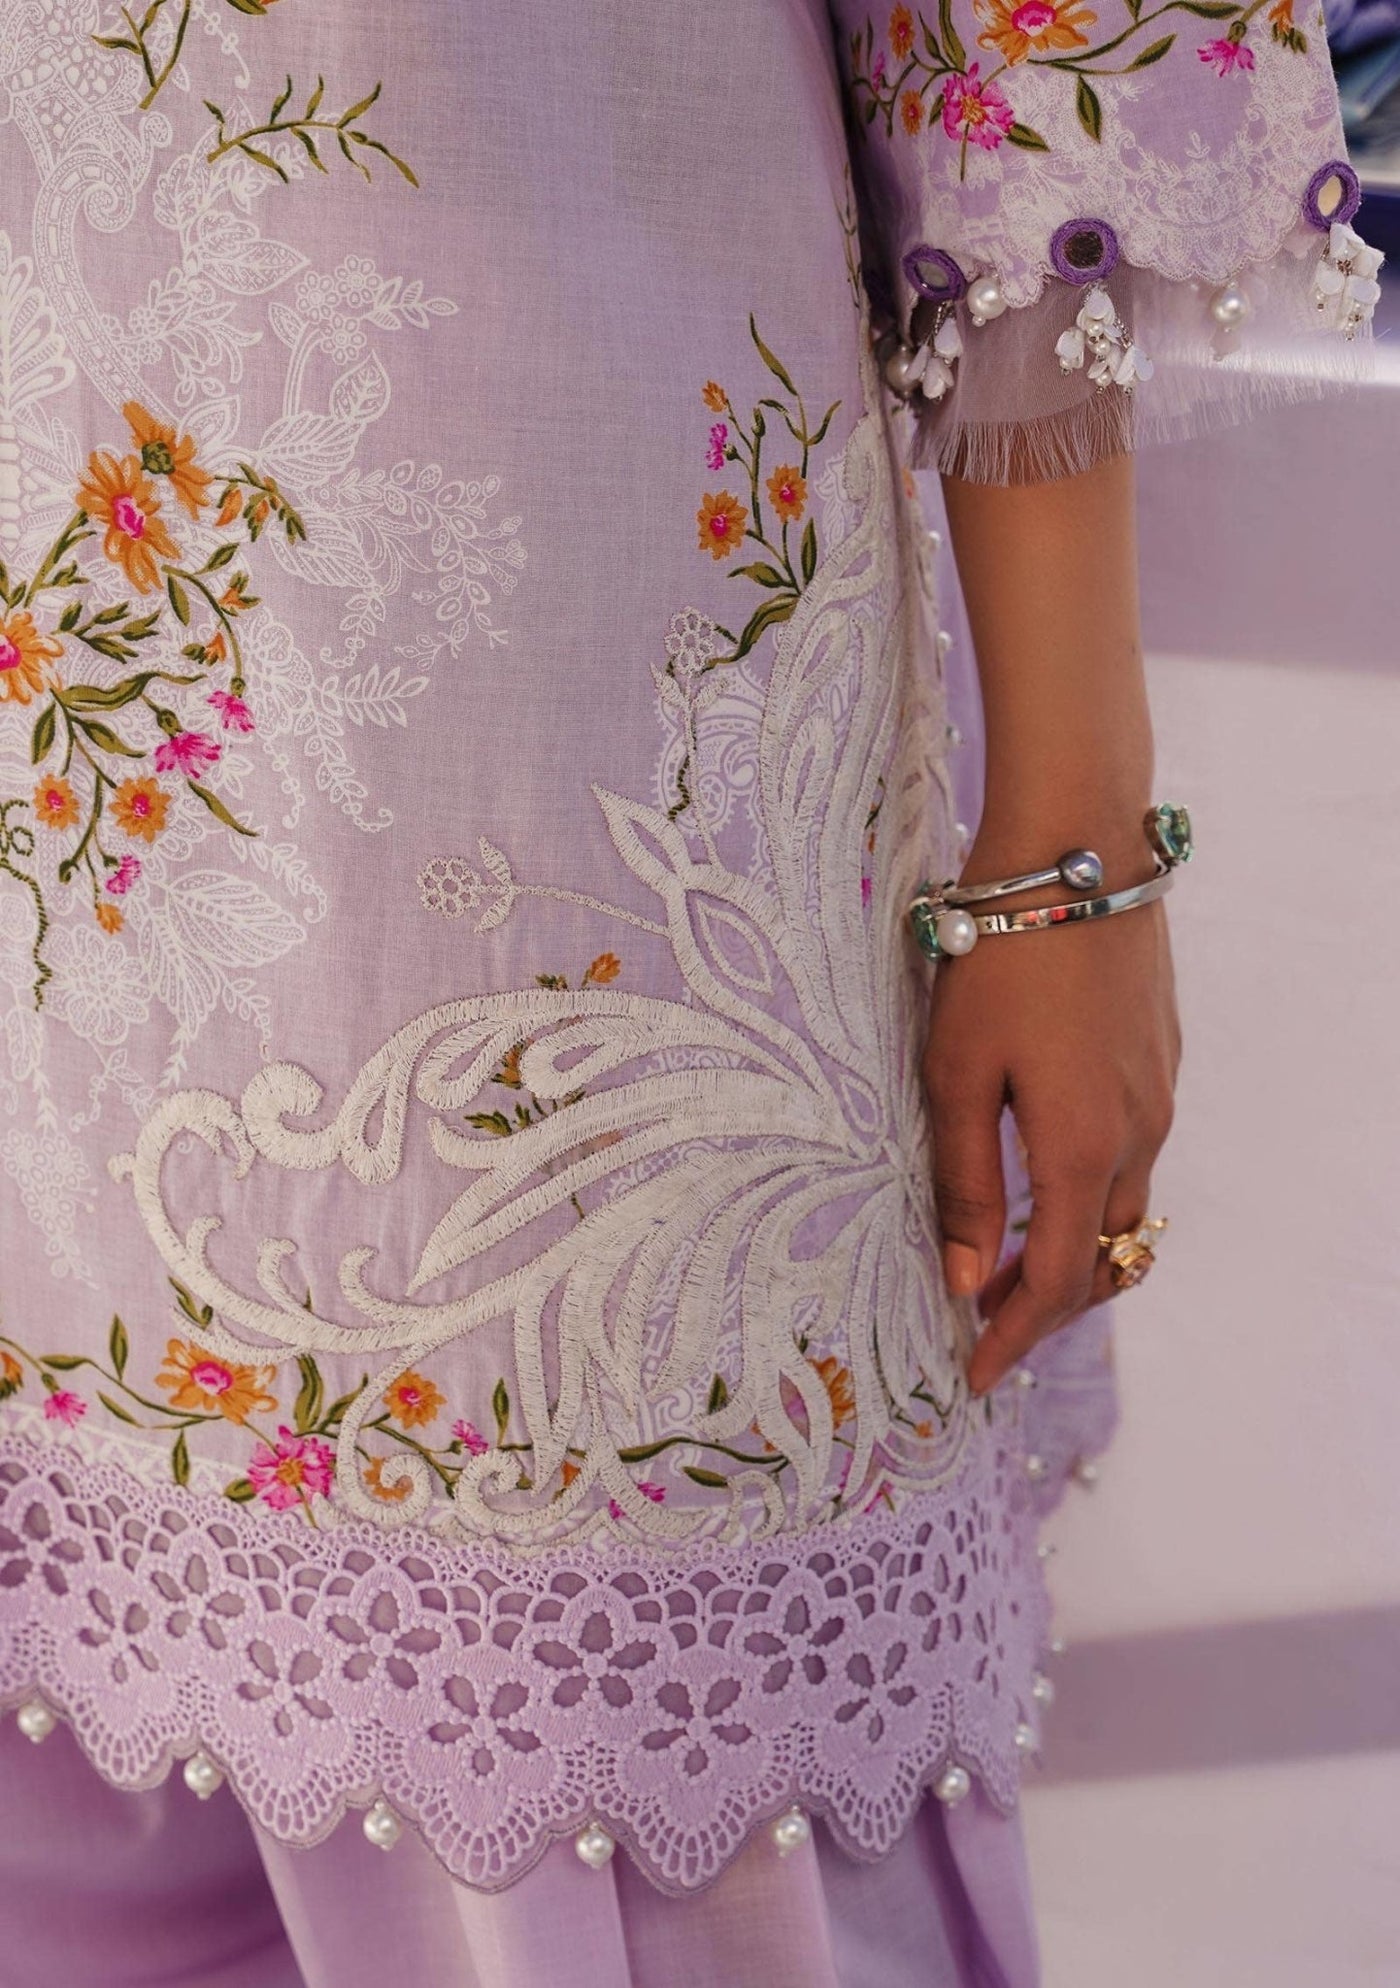 Sana Safinaz Spring Muzlin Pakistani Dress - db25265